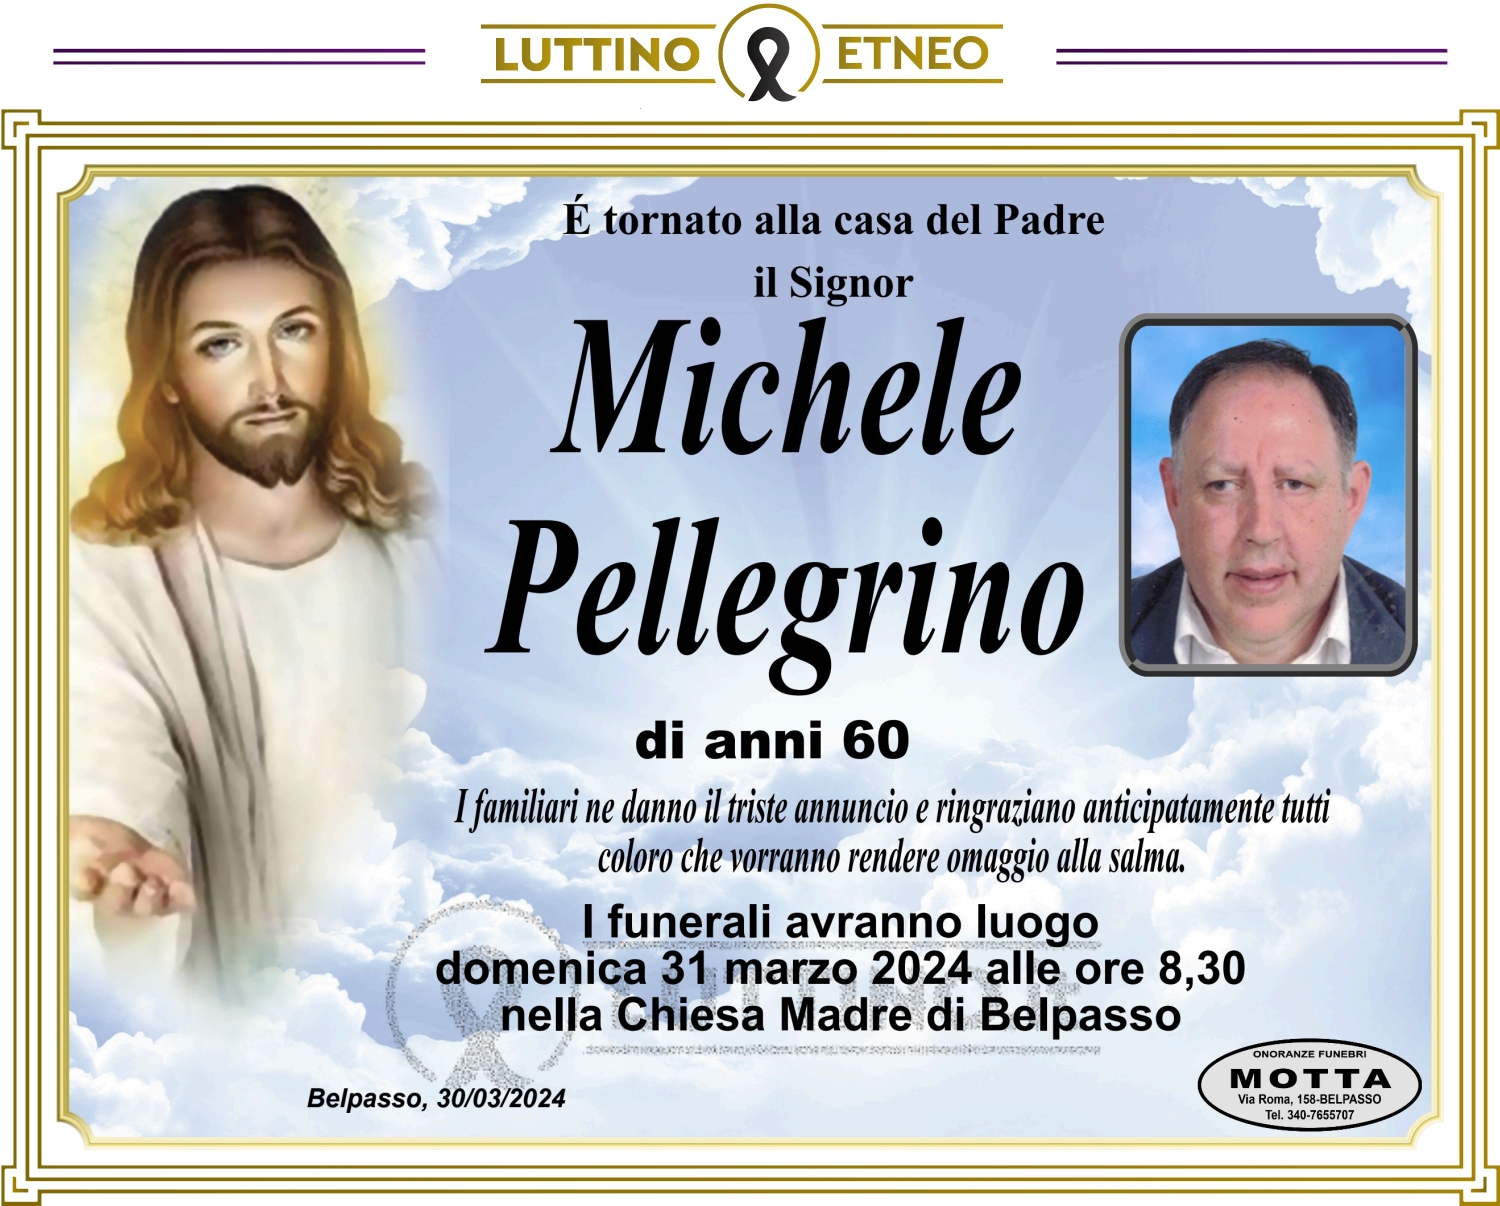 Michele Pellegrino